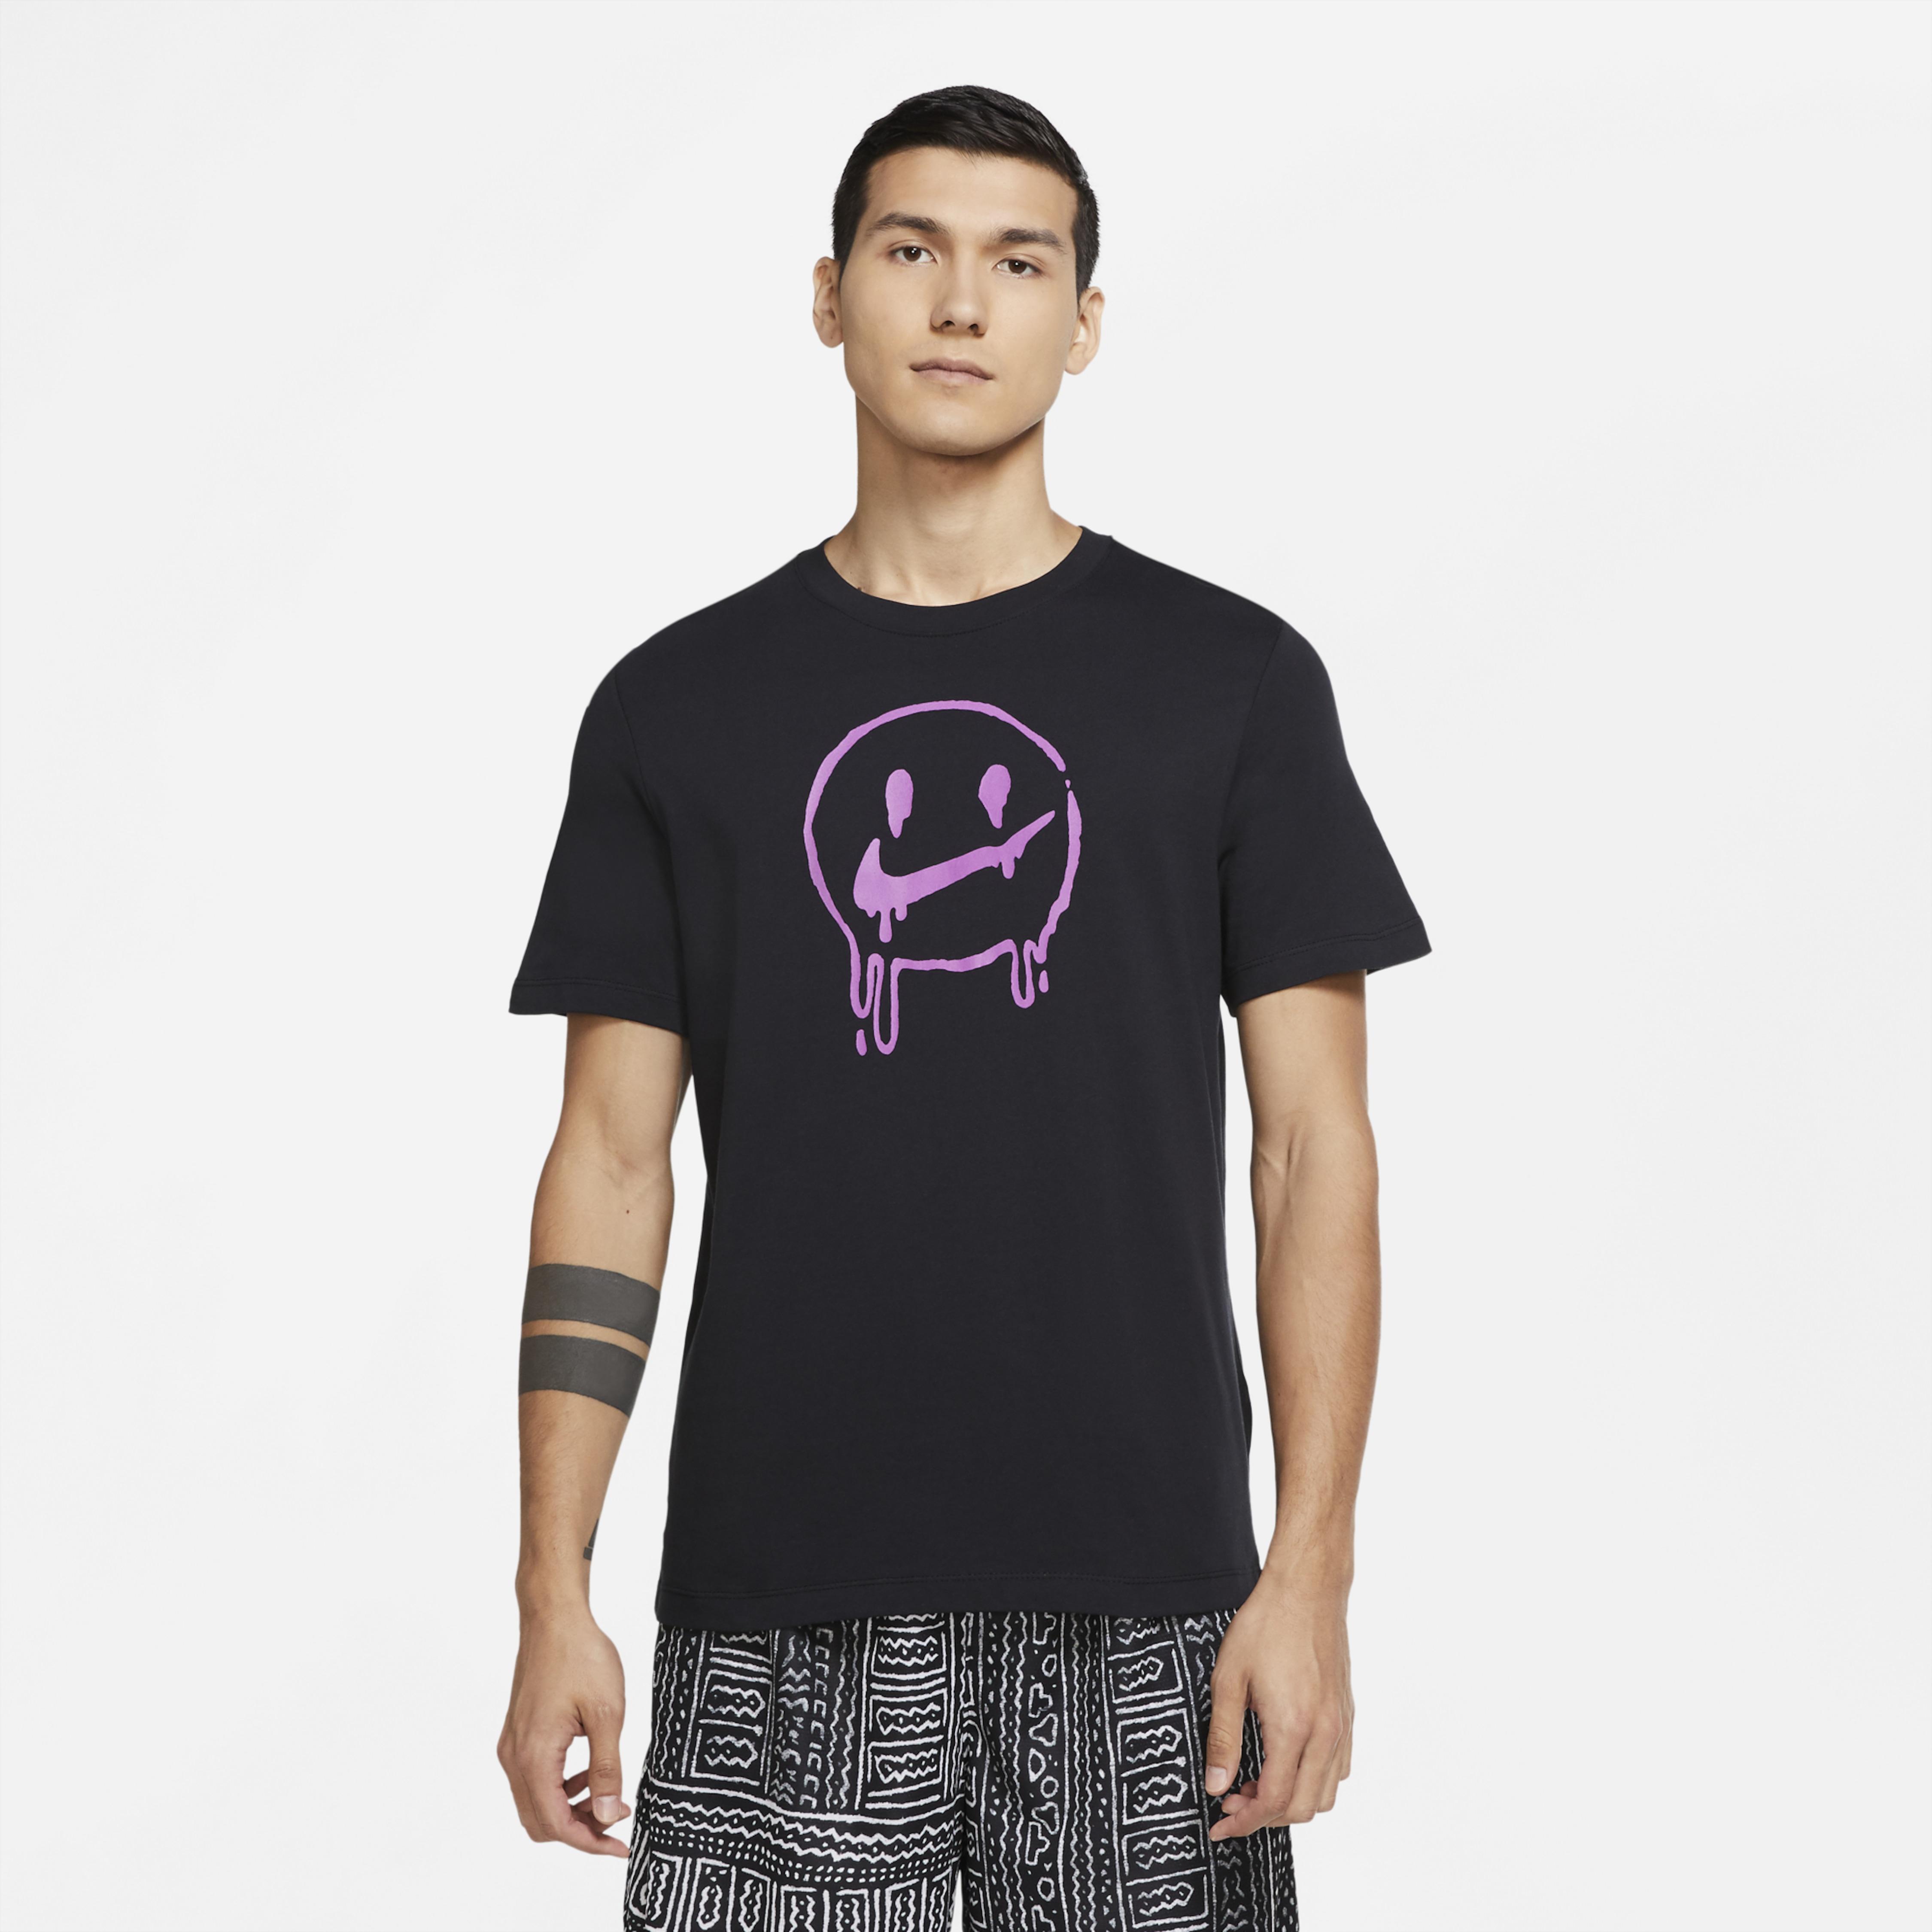 Nike Cotton Swoosh Smile T-shirt in Black/Yellow (Black) for Men - Lyst